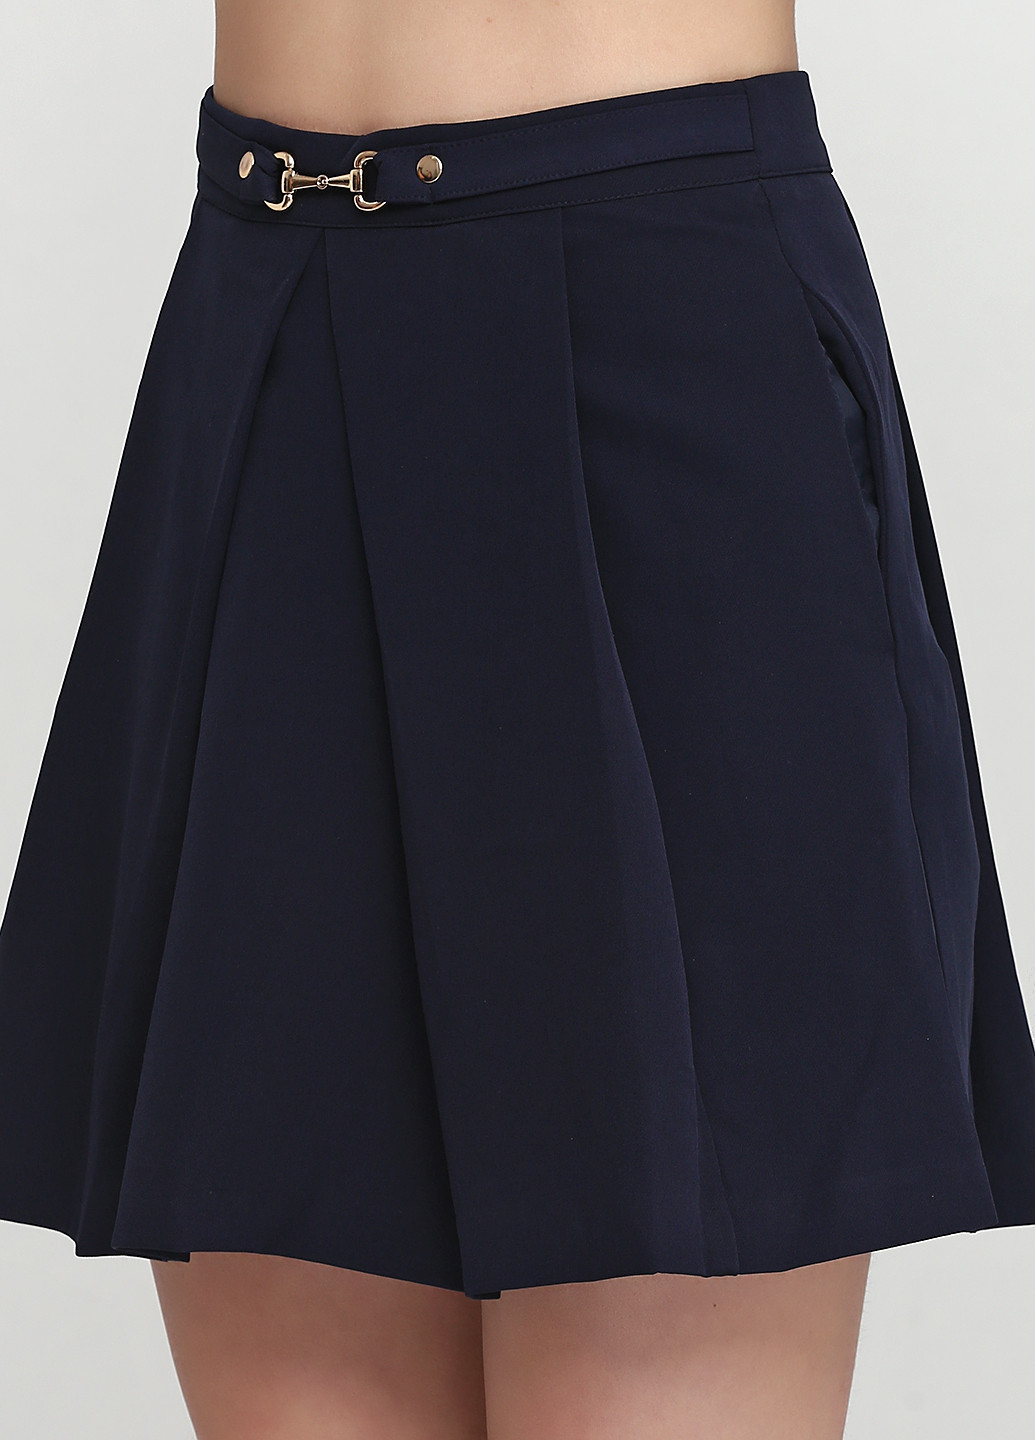 Темно-синяя кэжуал однотонная юбка Stradivarius мини